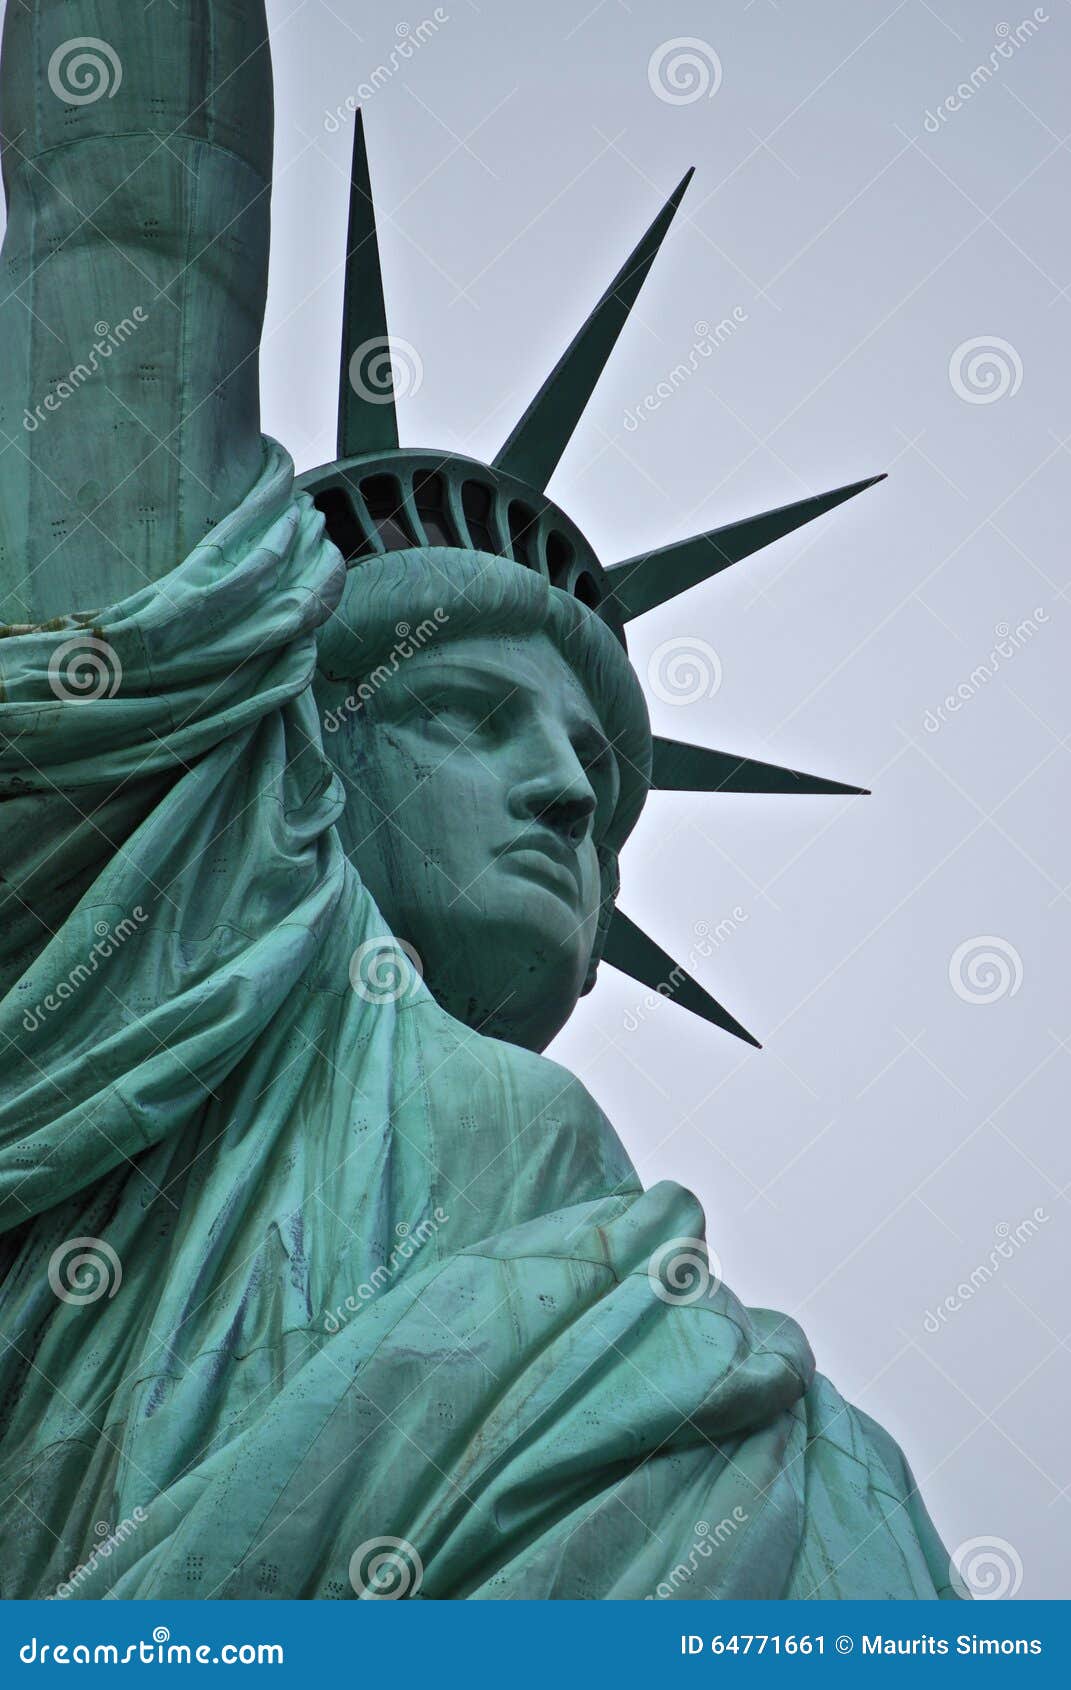 new york city - statue of liberty - america